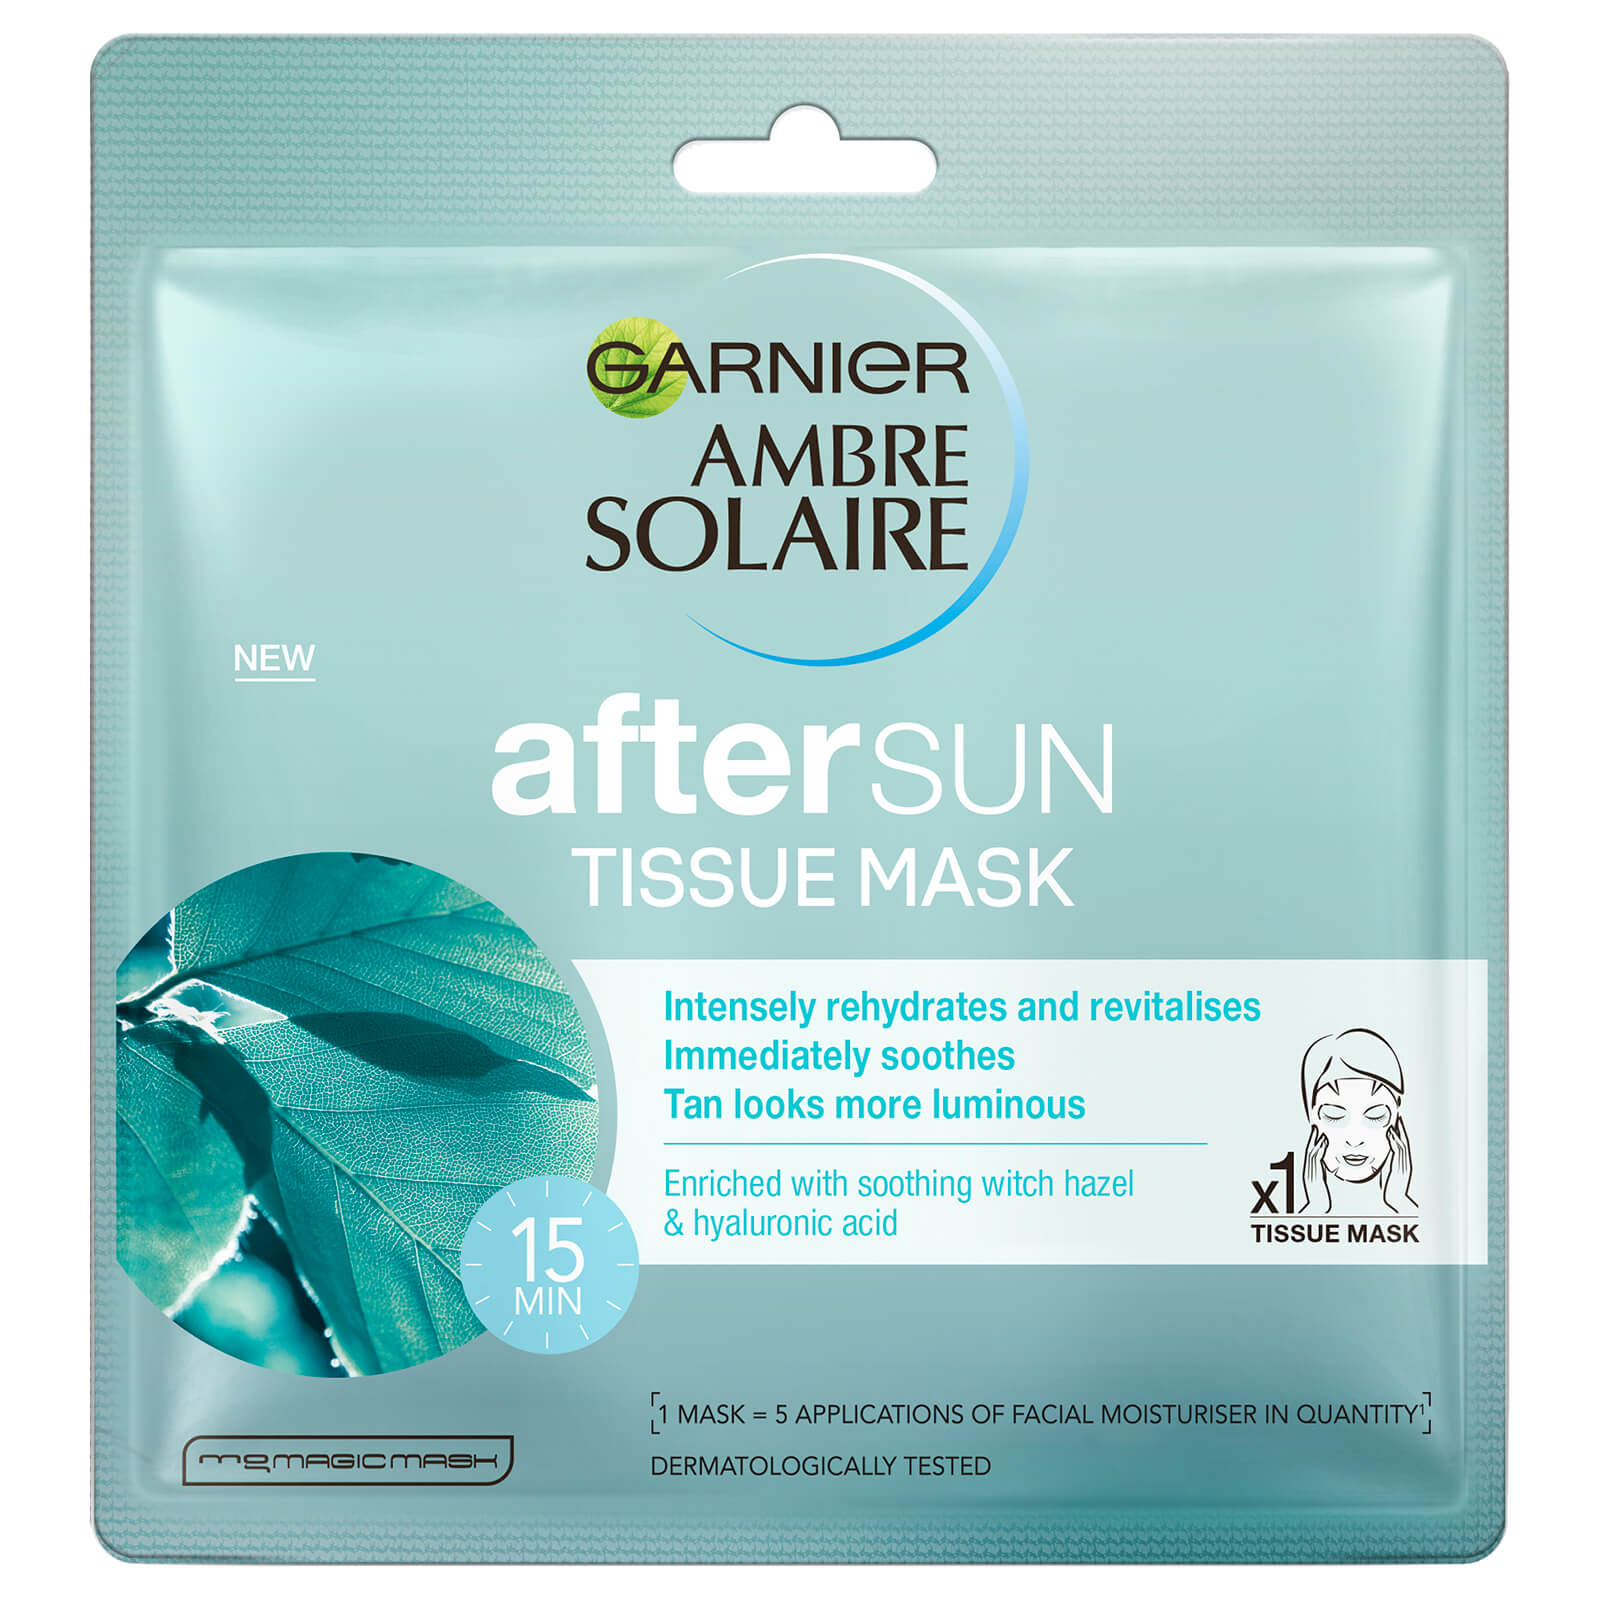 Garnier ambre solaire after sun tissue mask